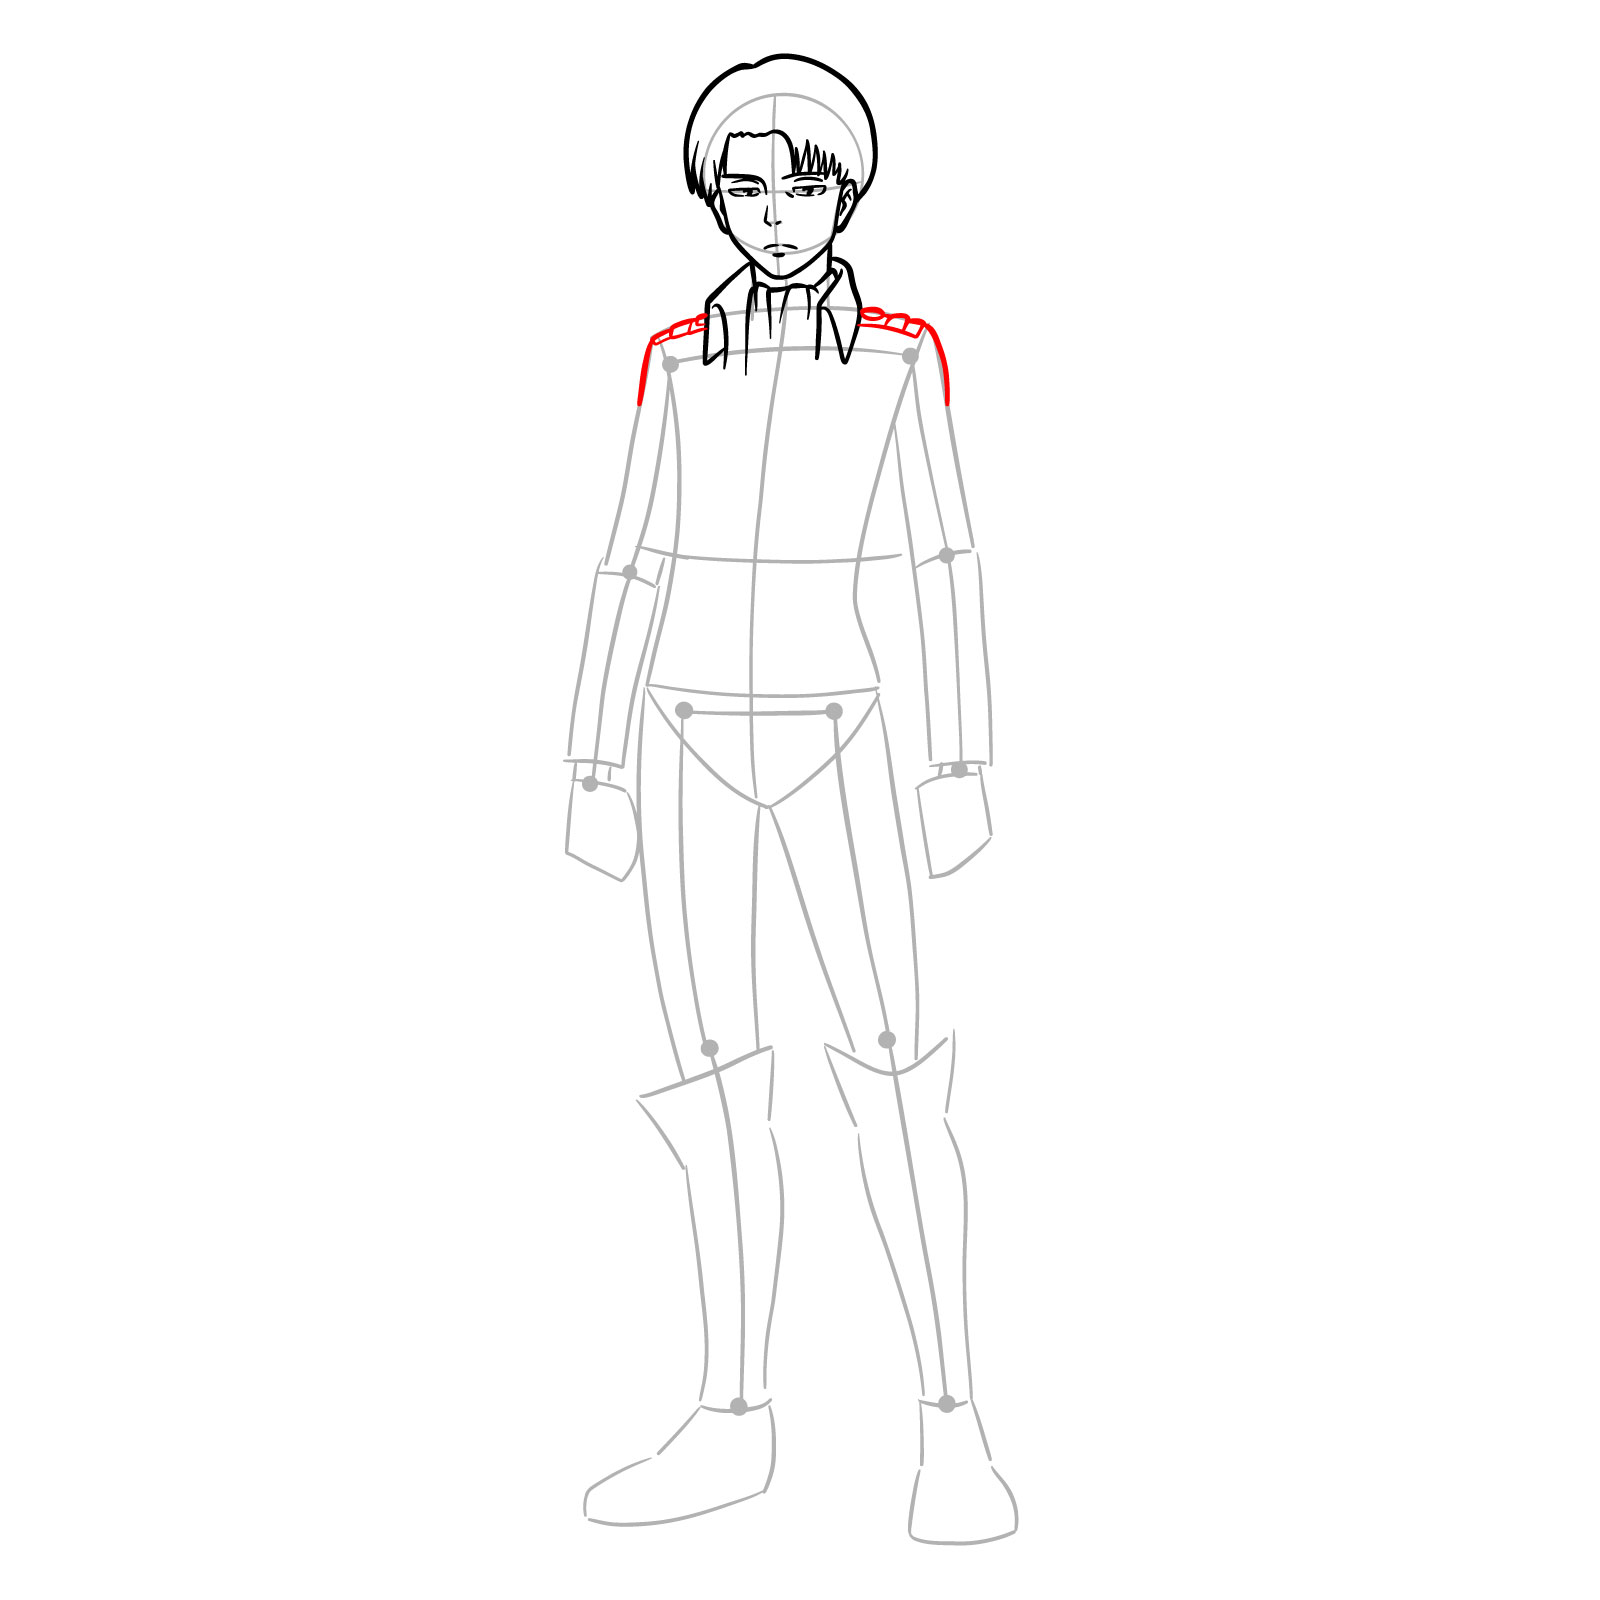 Shoulders and shoulder straps of Levi's uniform in full body sketch - step 11